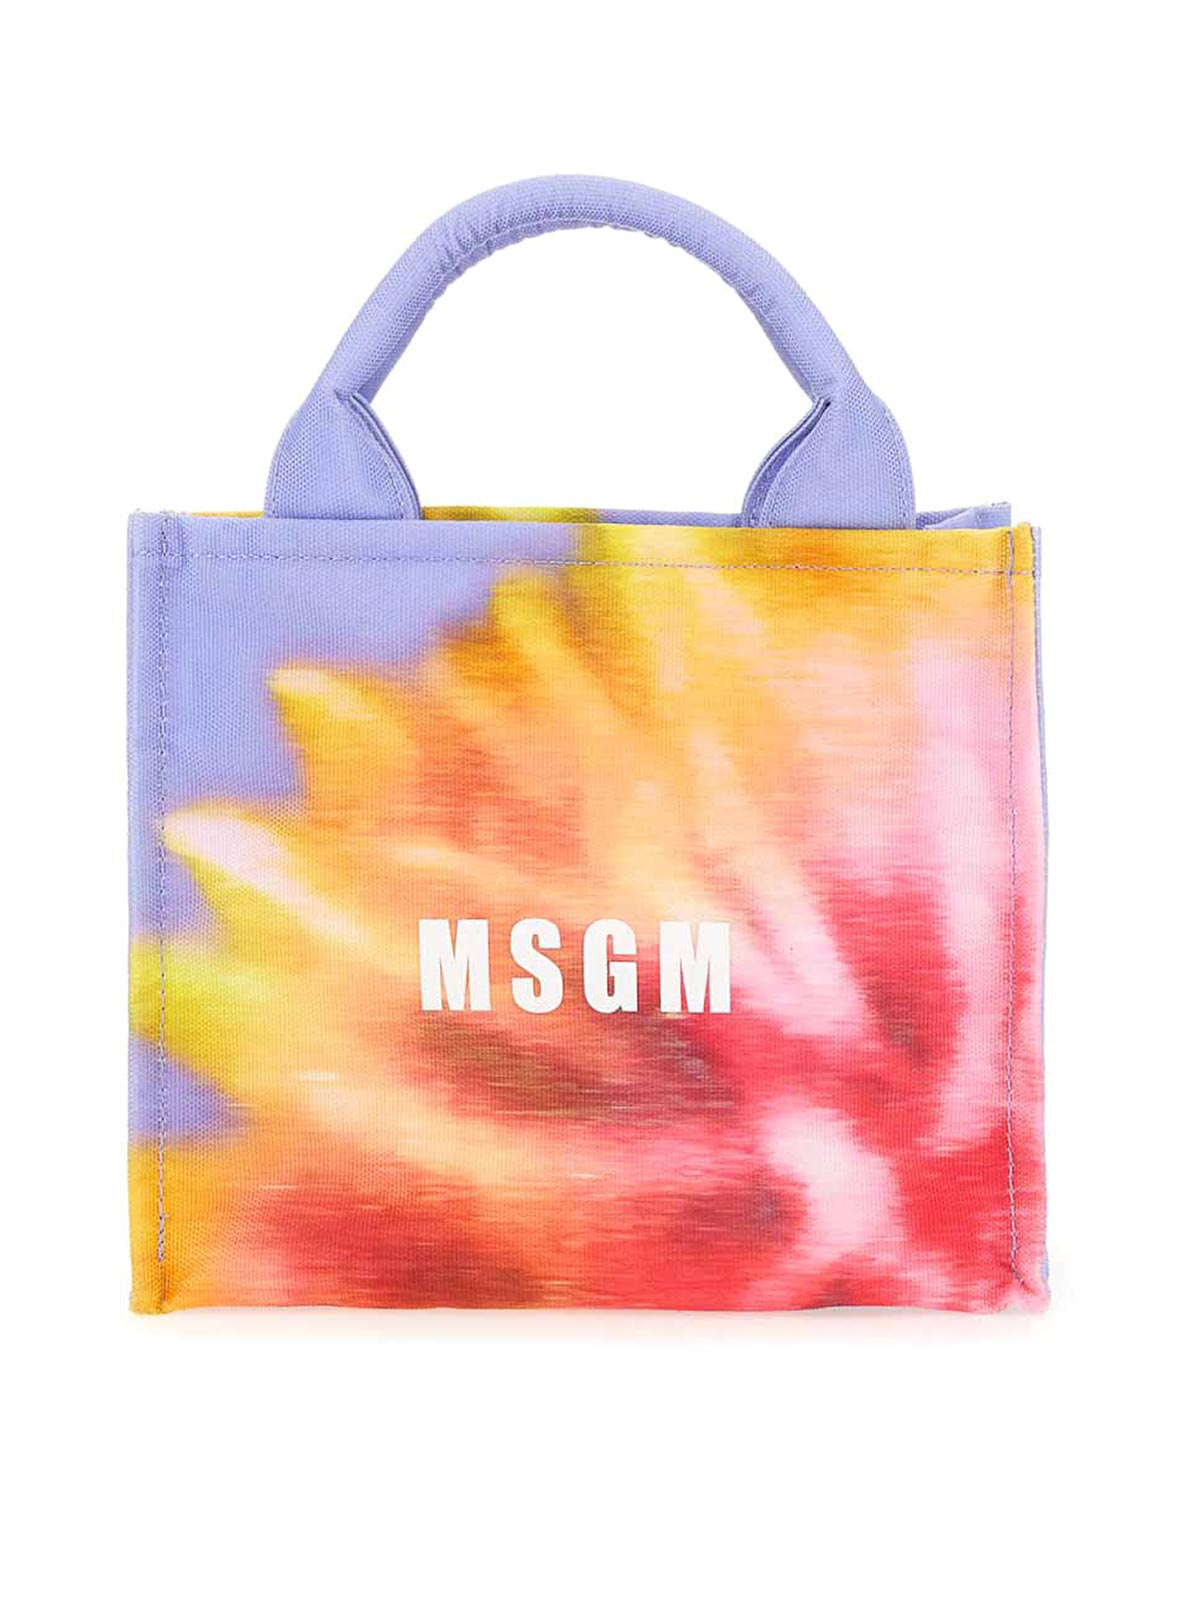 Msgm Small Tote Bag With Daisy Print In Multicolour